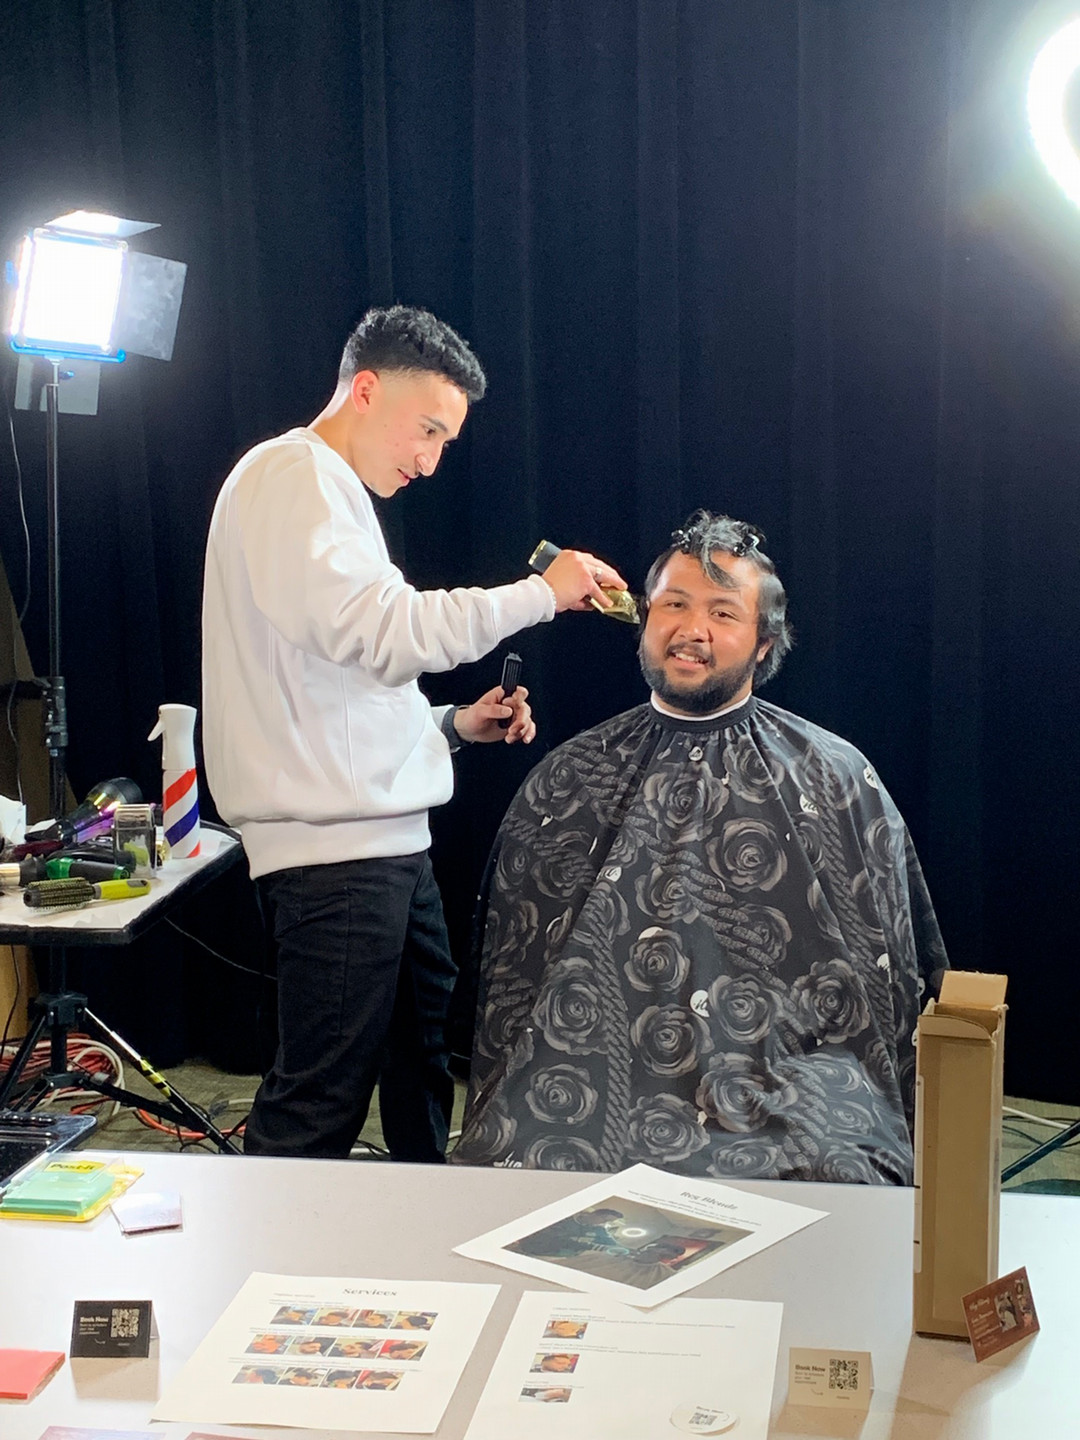 Student and professional barber, Gael Regalado, works his magic!